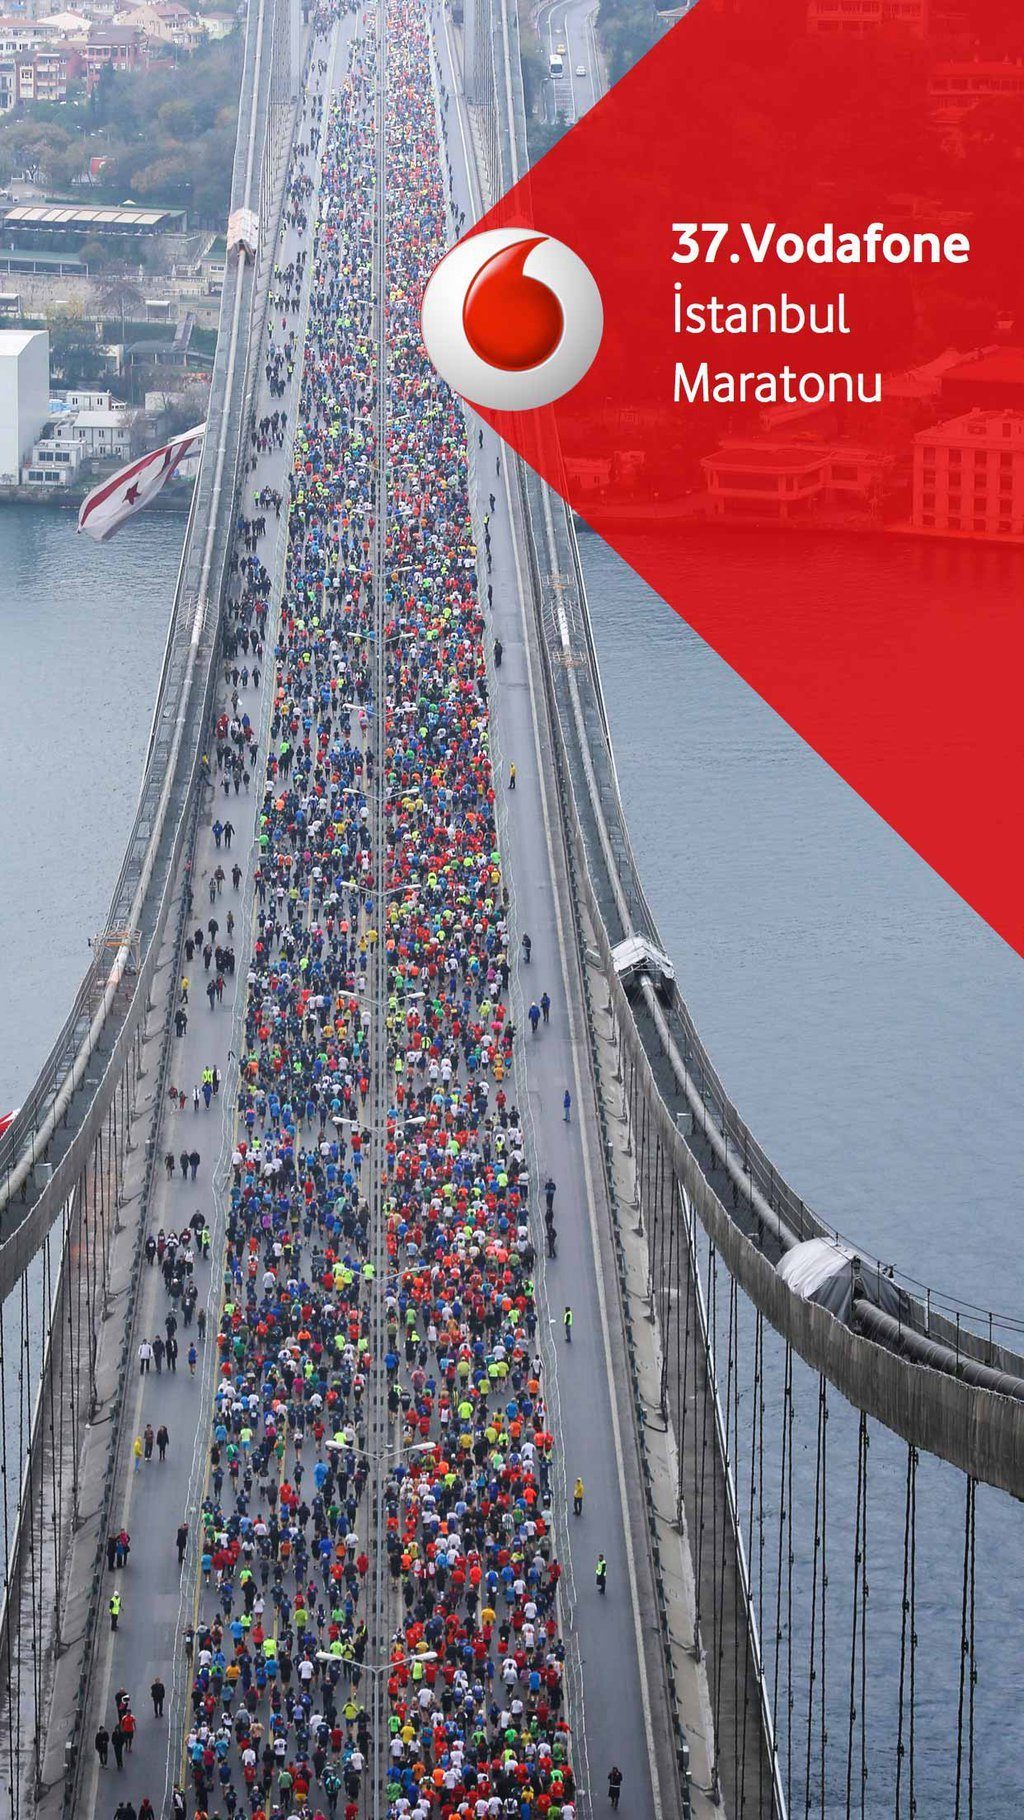 vodafone-istanbul-maratonu-37-091115-1